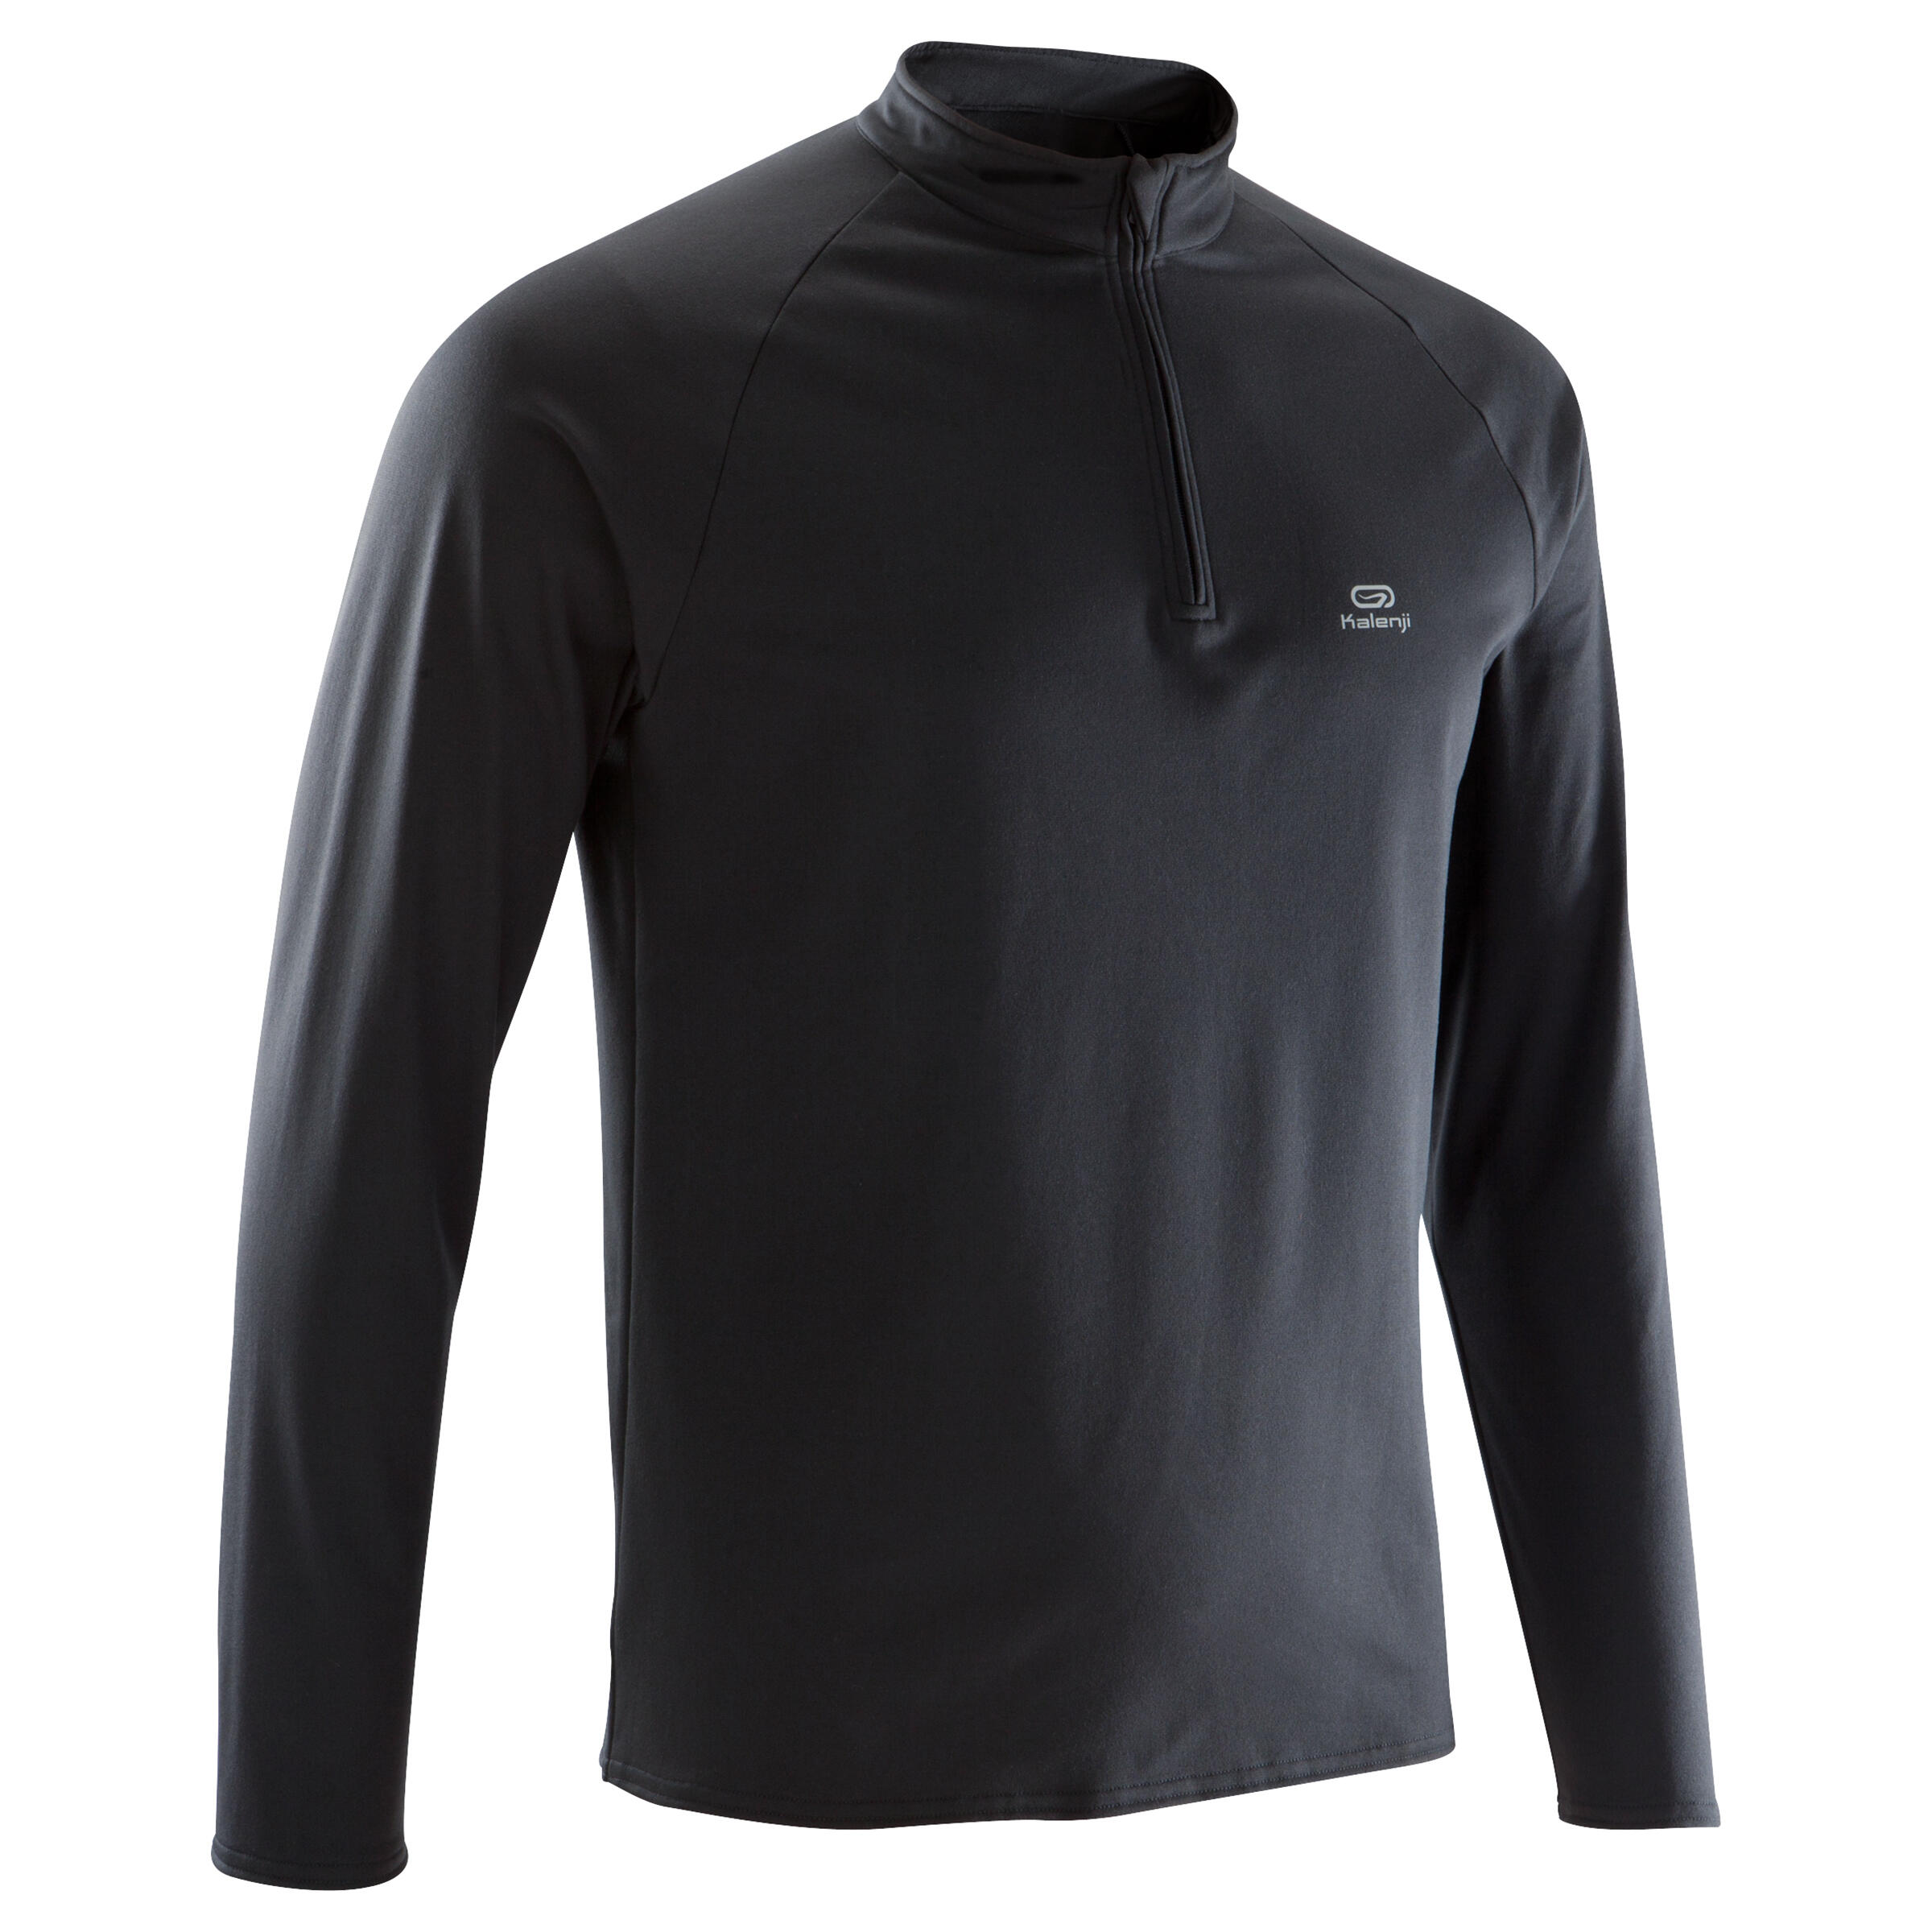 KALENJI Run Warm Men's Long-Sleeved T-Shirt - Black